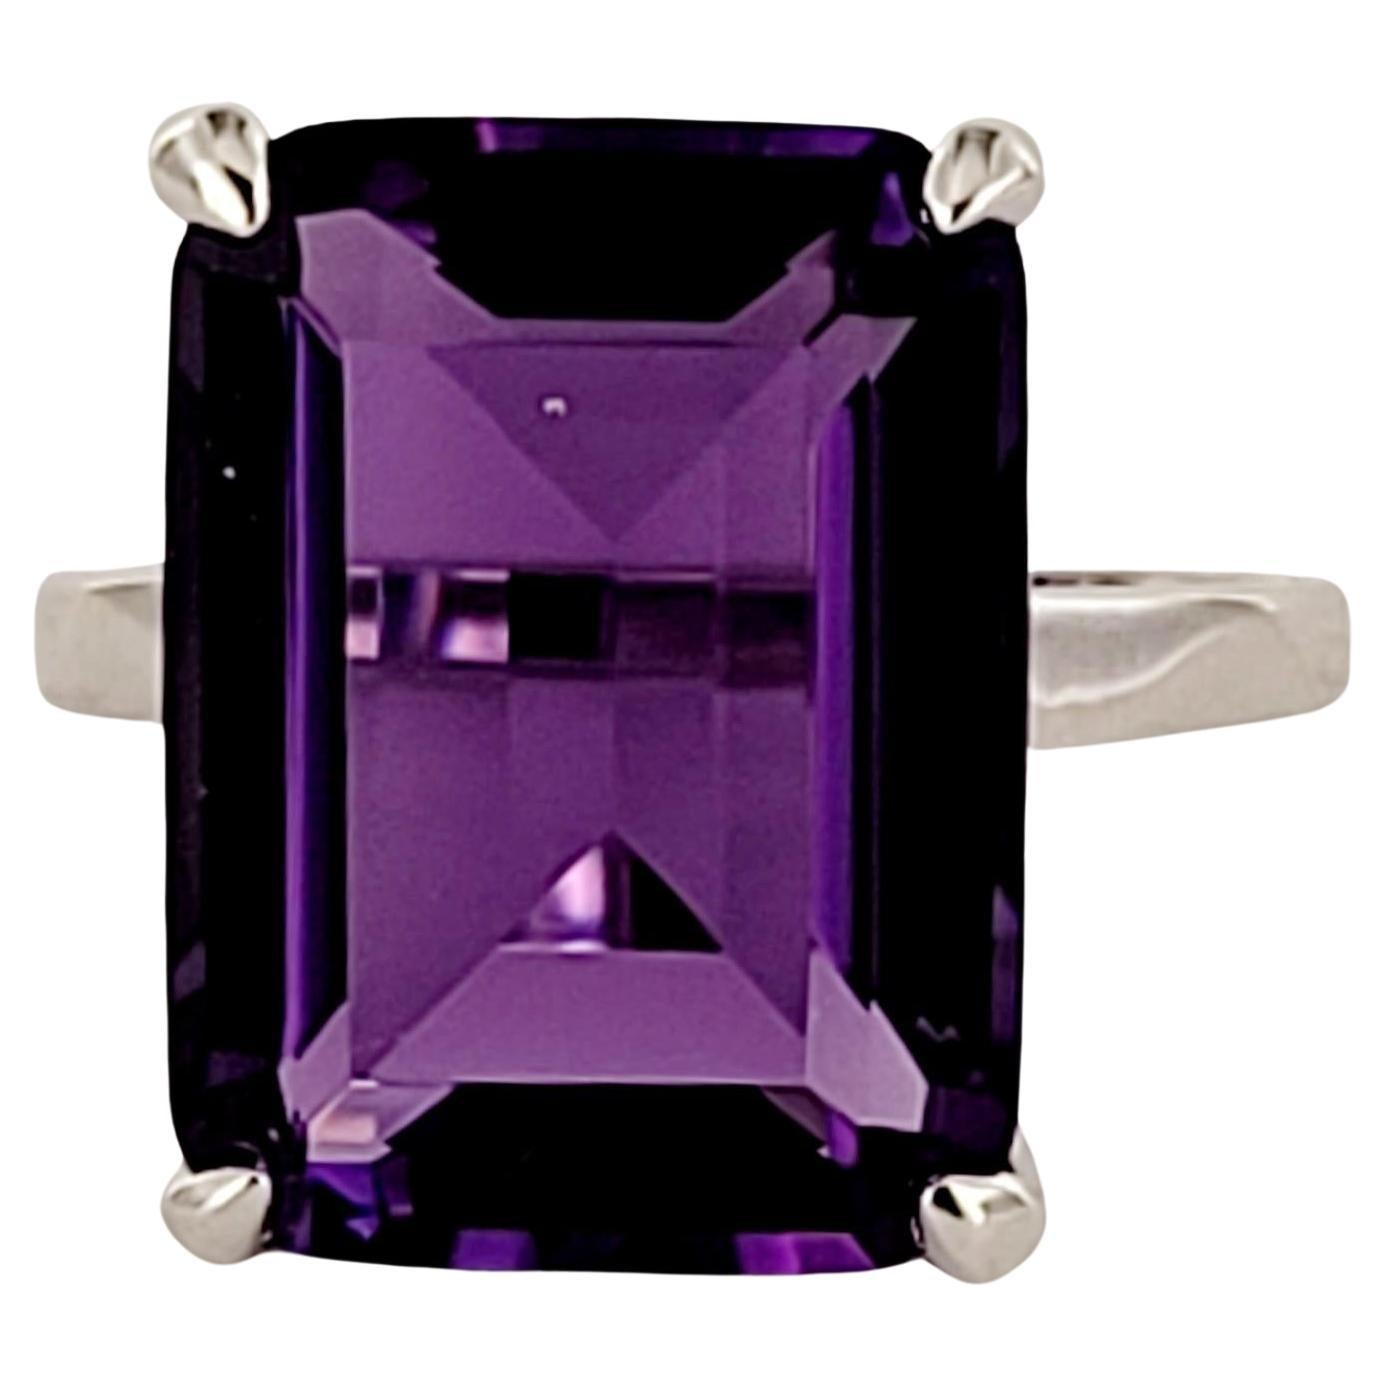 Tiffany & co Sterling Silver Sparkler Amethyst Gemstone Ring Size 6.75